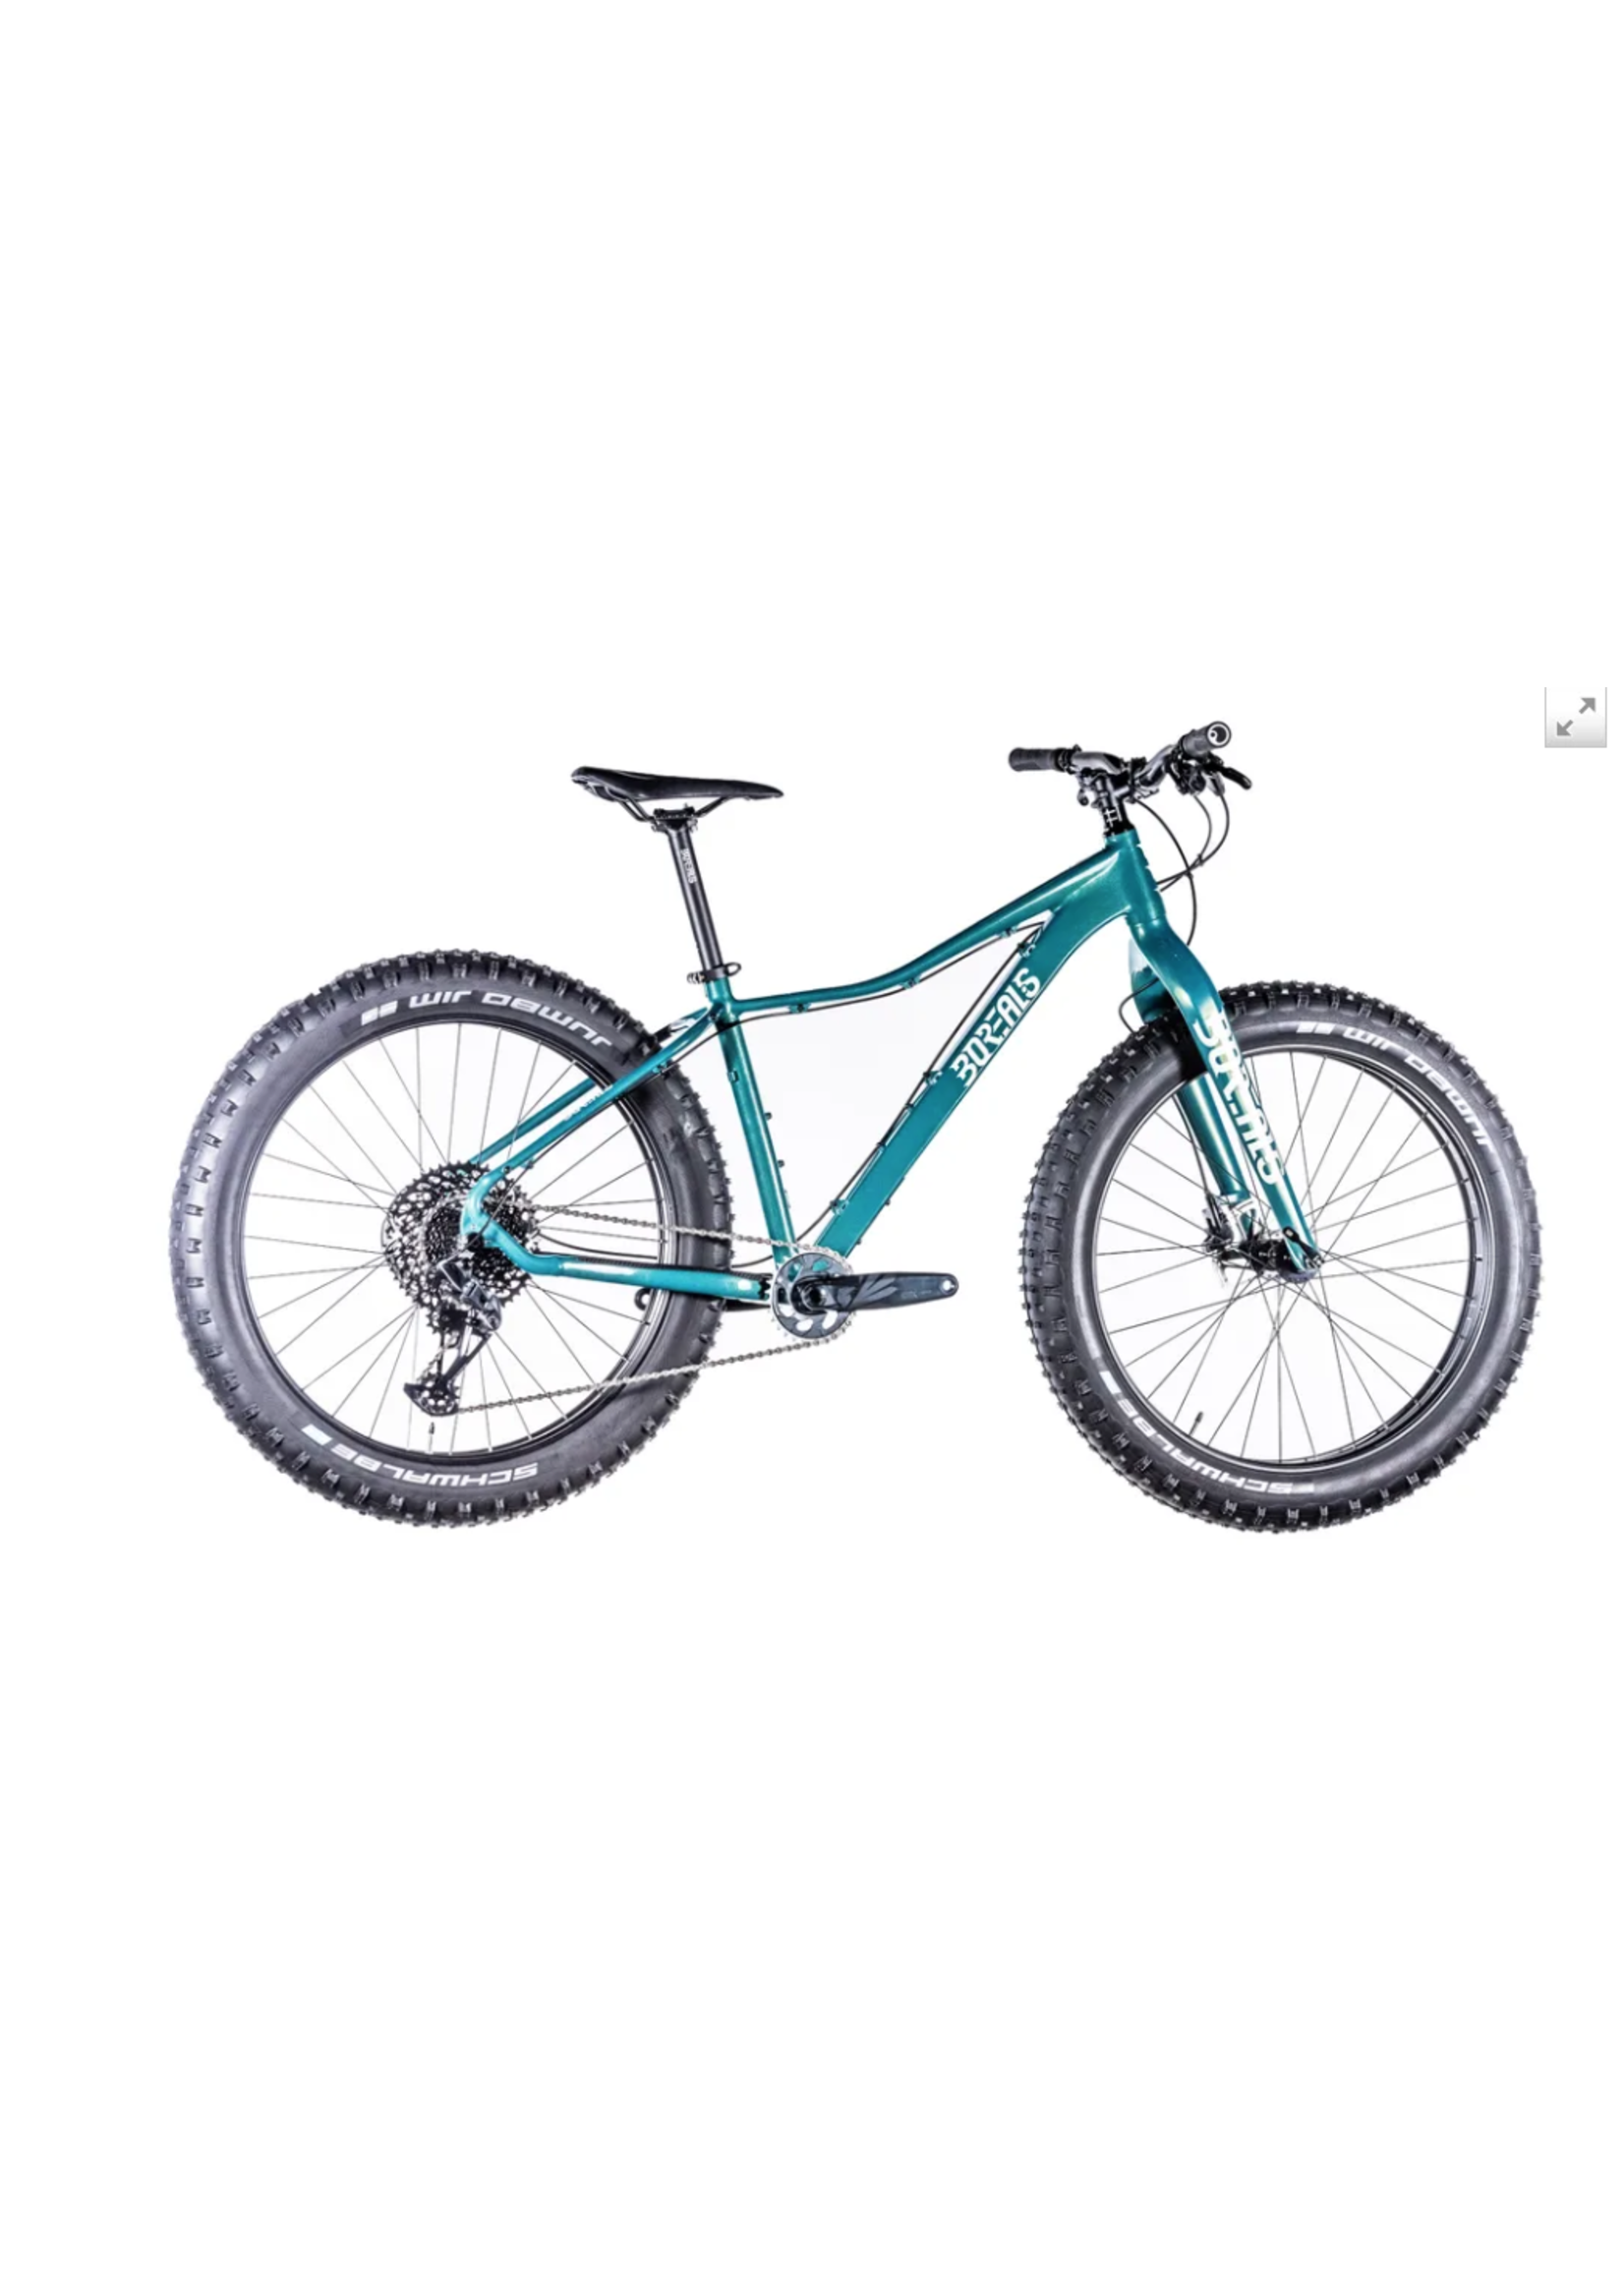 Borealis Borealis Flume Fat bike 2022 MEDIUM, Sea Foam Green, NX Eagle, Mulefut wheels, VELOCITY HUB UPGRADE, Maxxis 26x4.8 tires